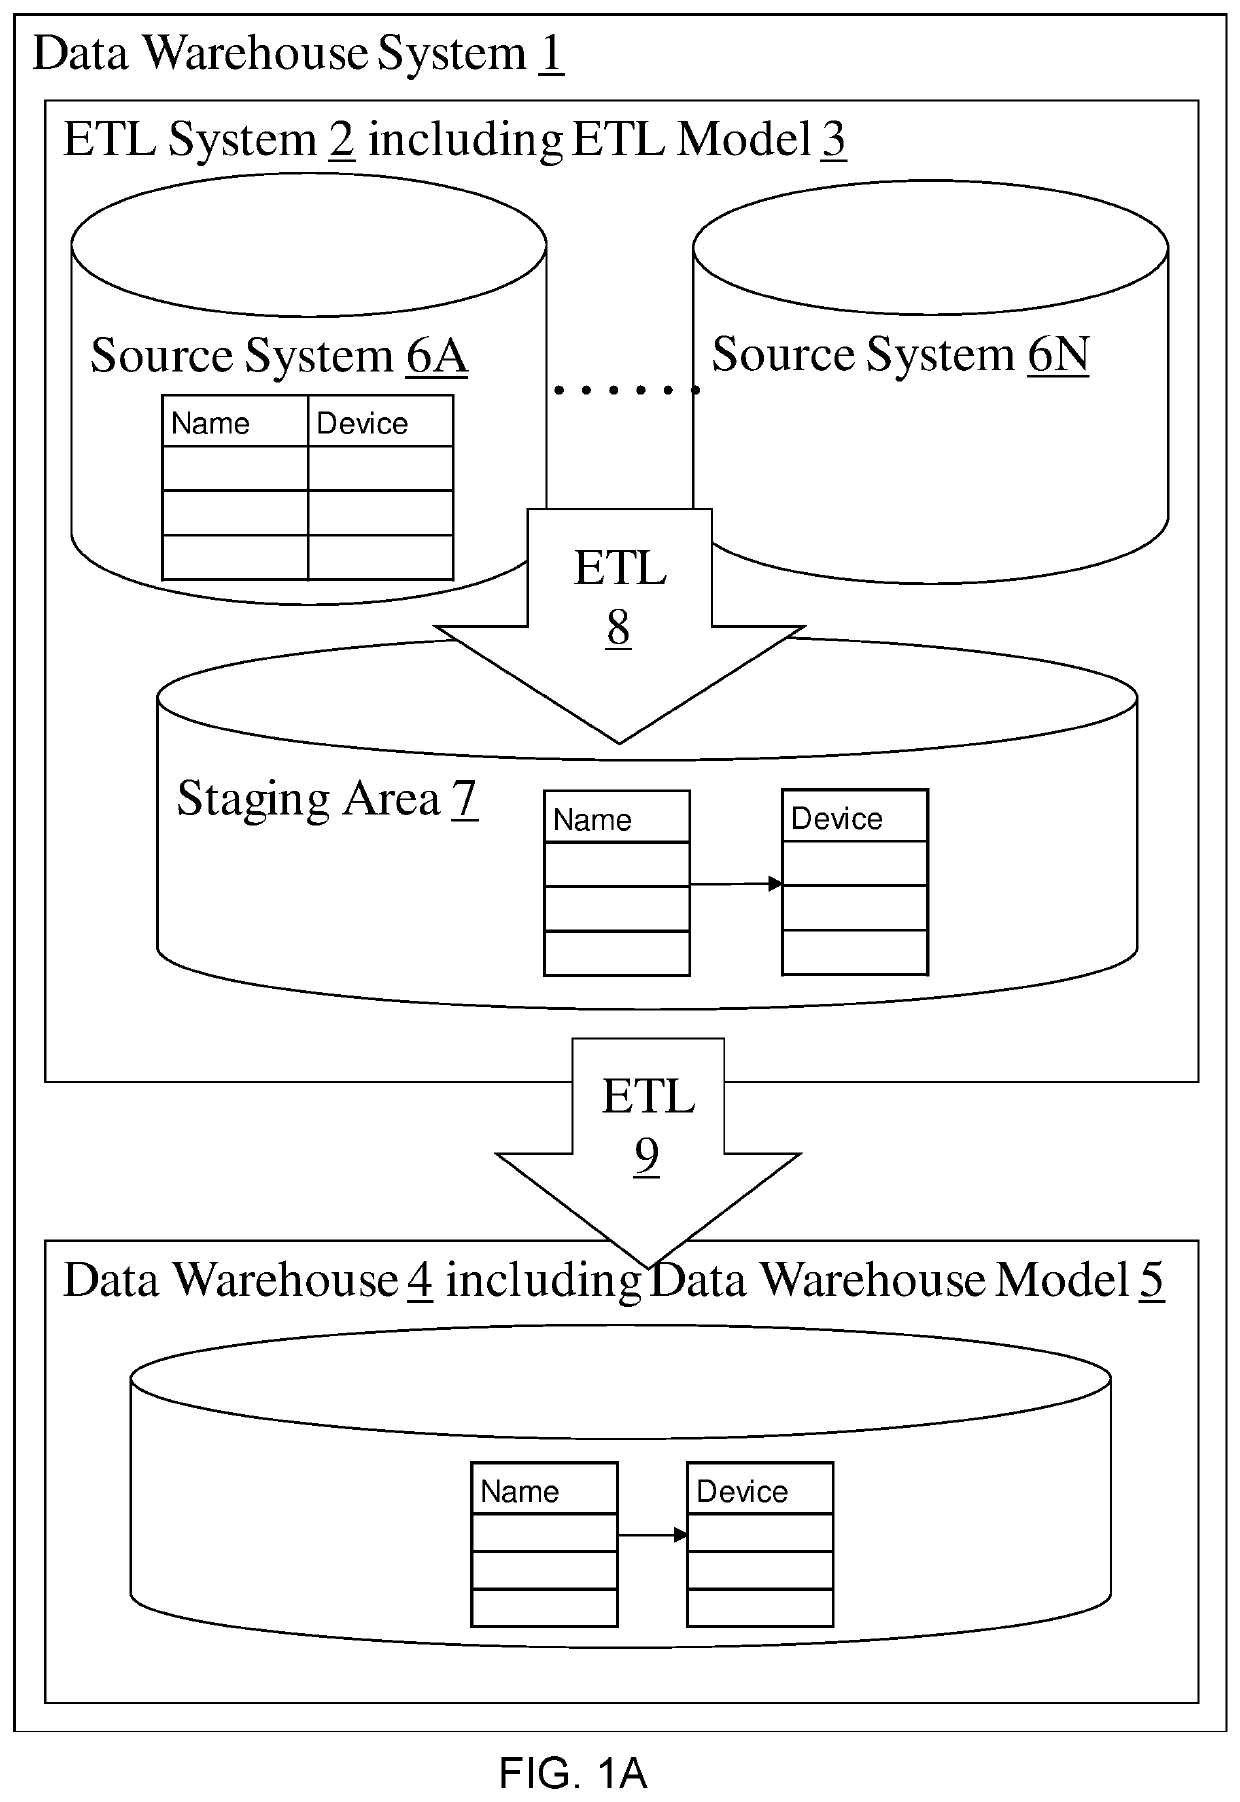 Data warehouse model validation